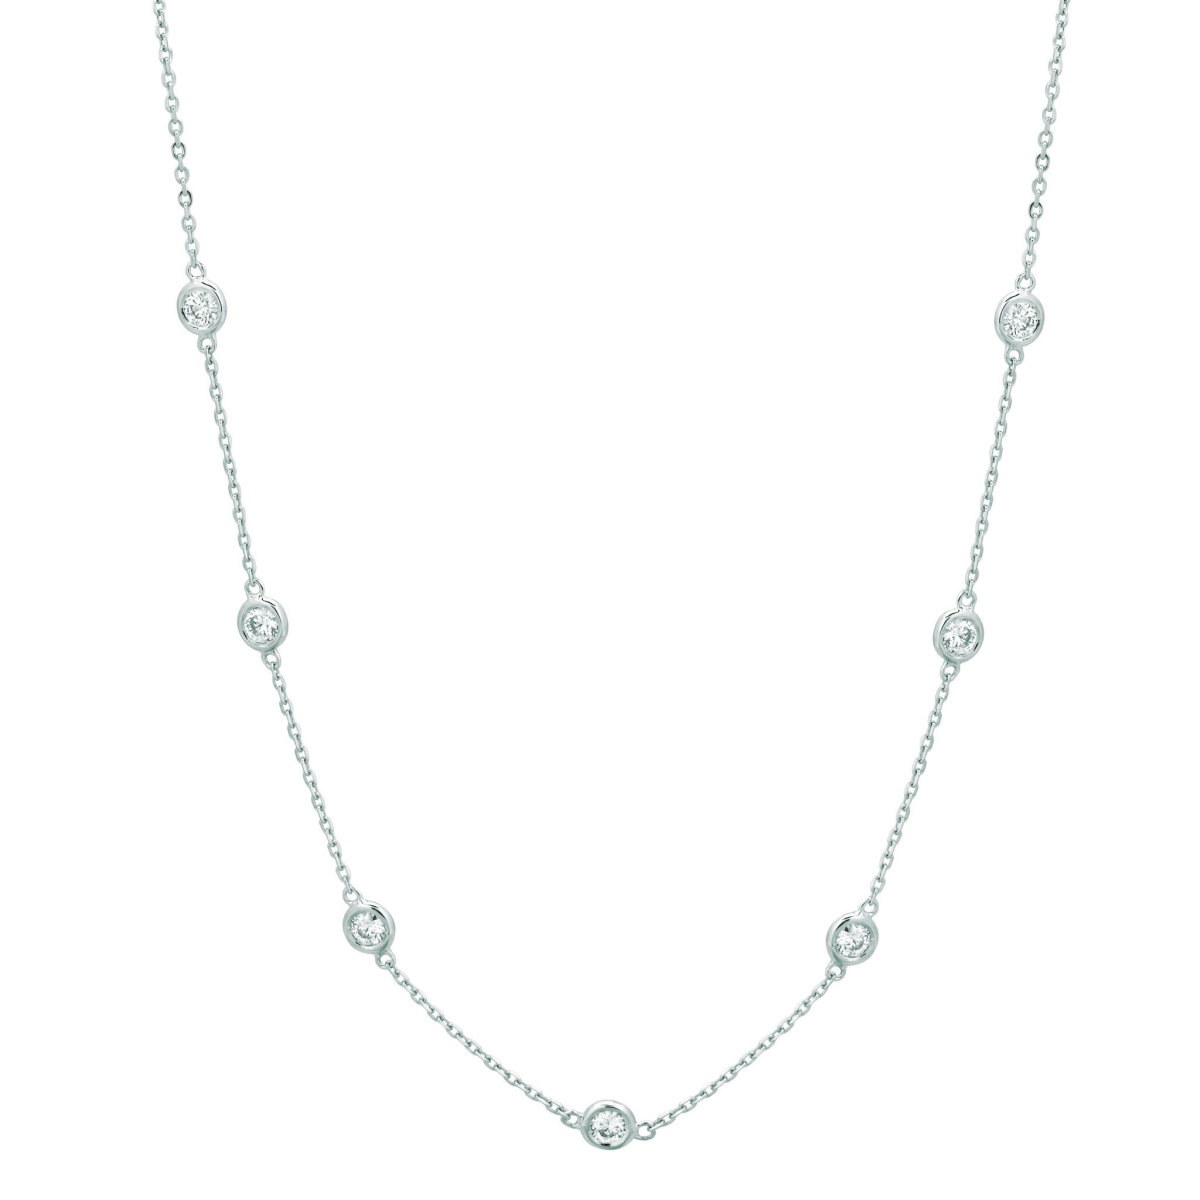 Hc11987 1 Ct 14k White 15 Pointer Diamond Half Way Around Chain Necklace - Color G-h - Si2 Clarity